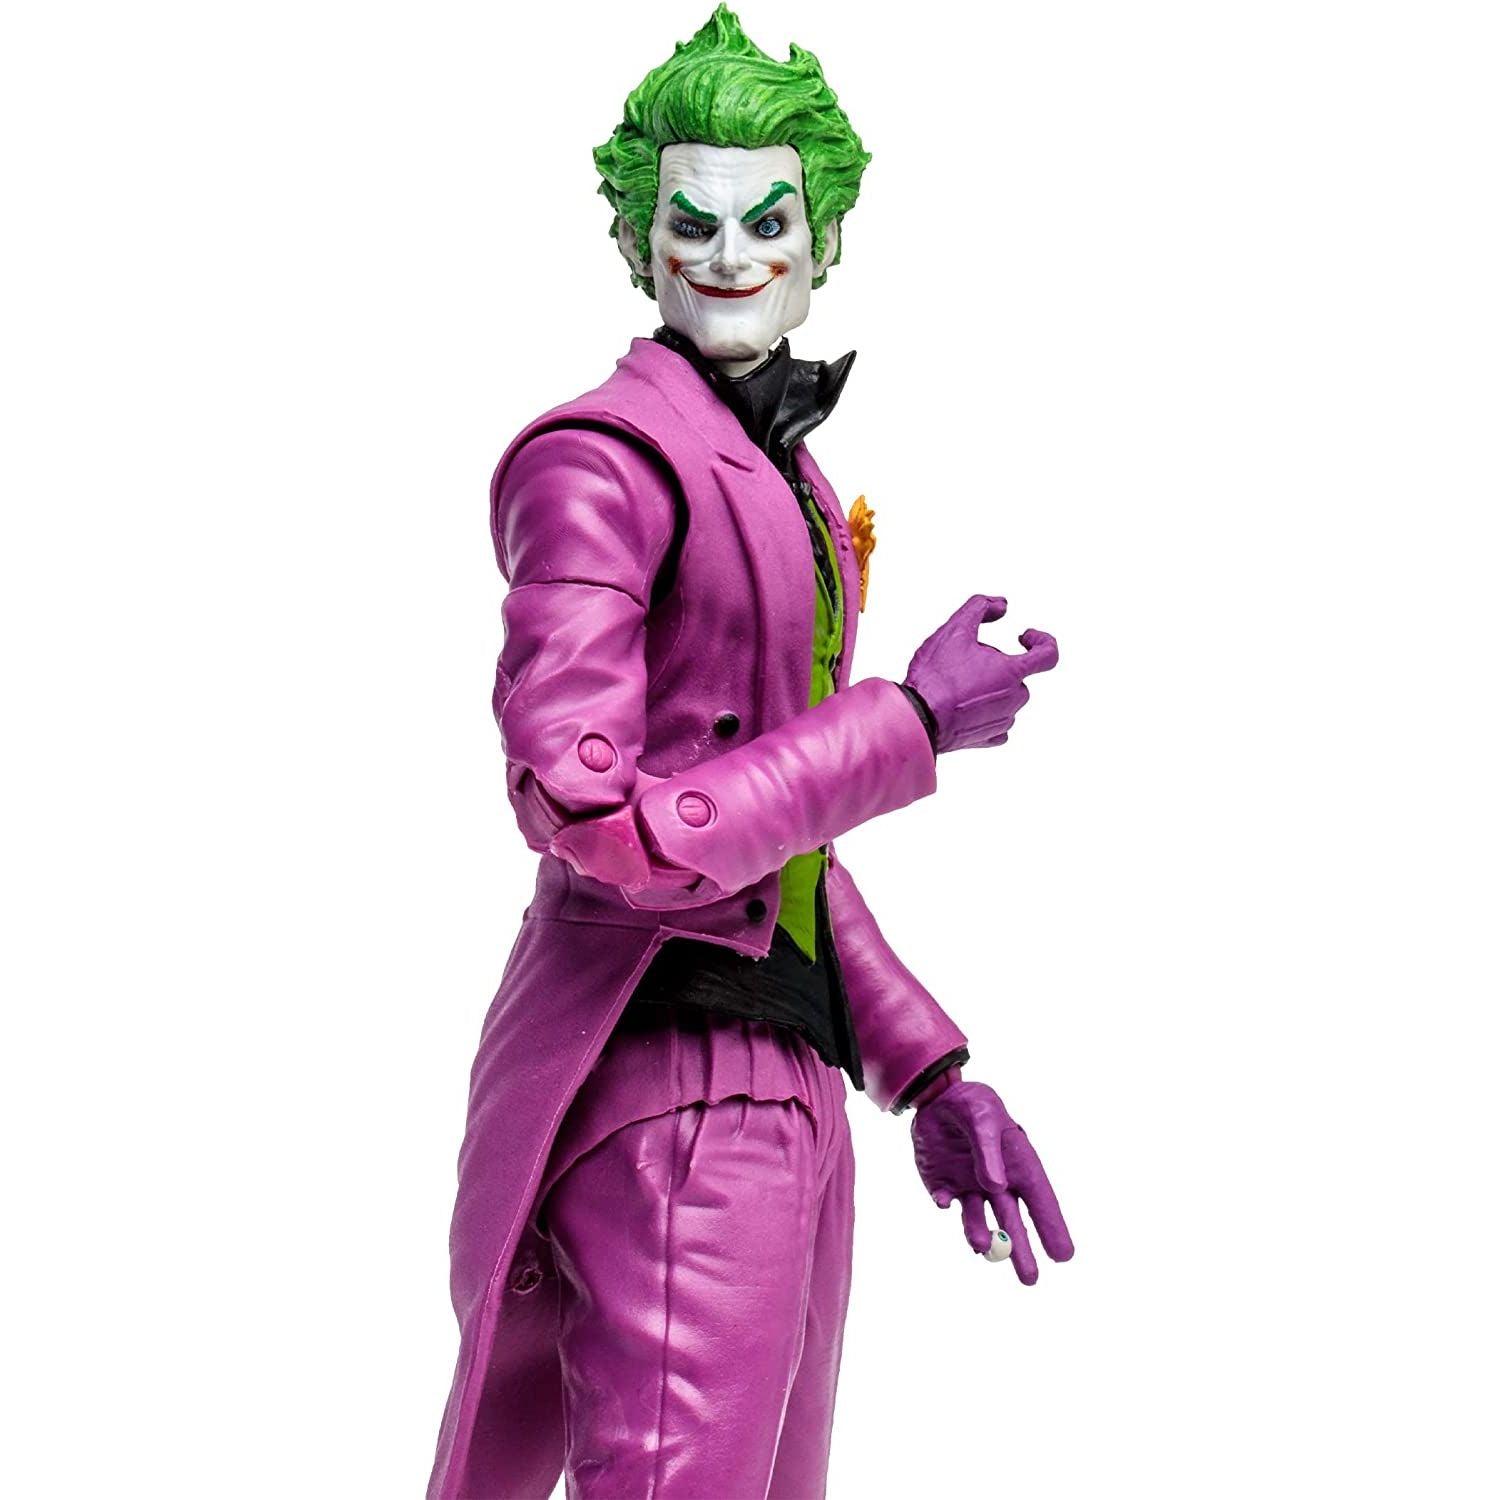 DC Multiverse The Joker Infinite Frontier 7-Inch Scale Action Figure